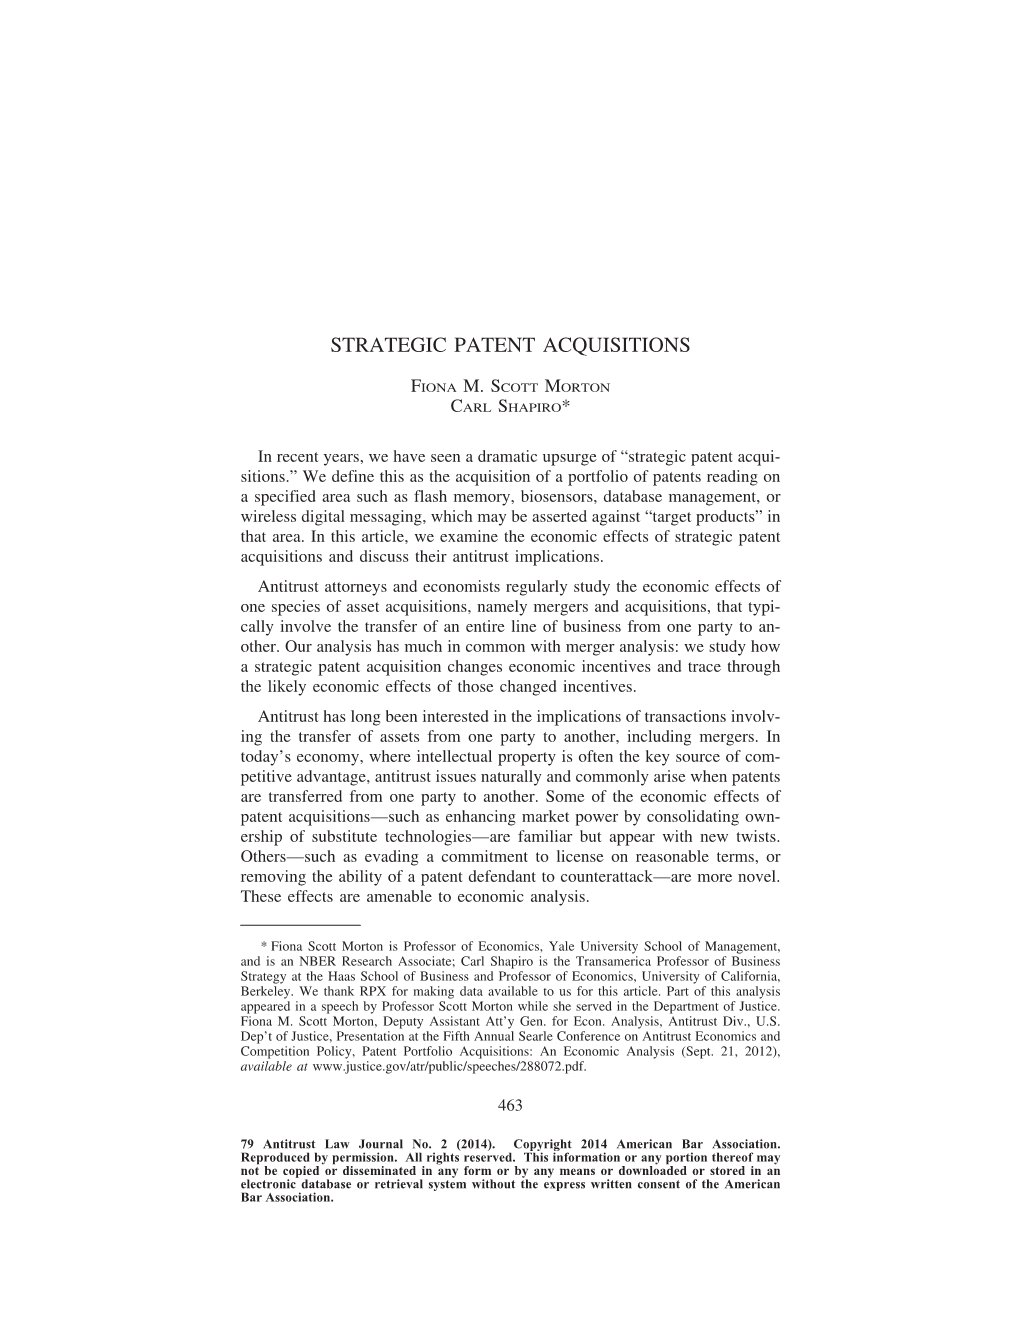 Strategic Patent Acquisitions